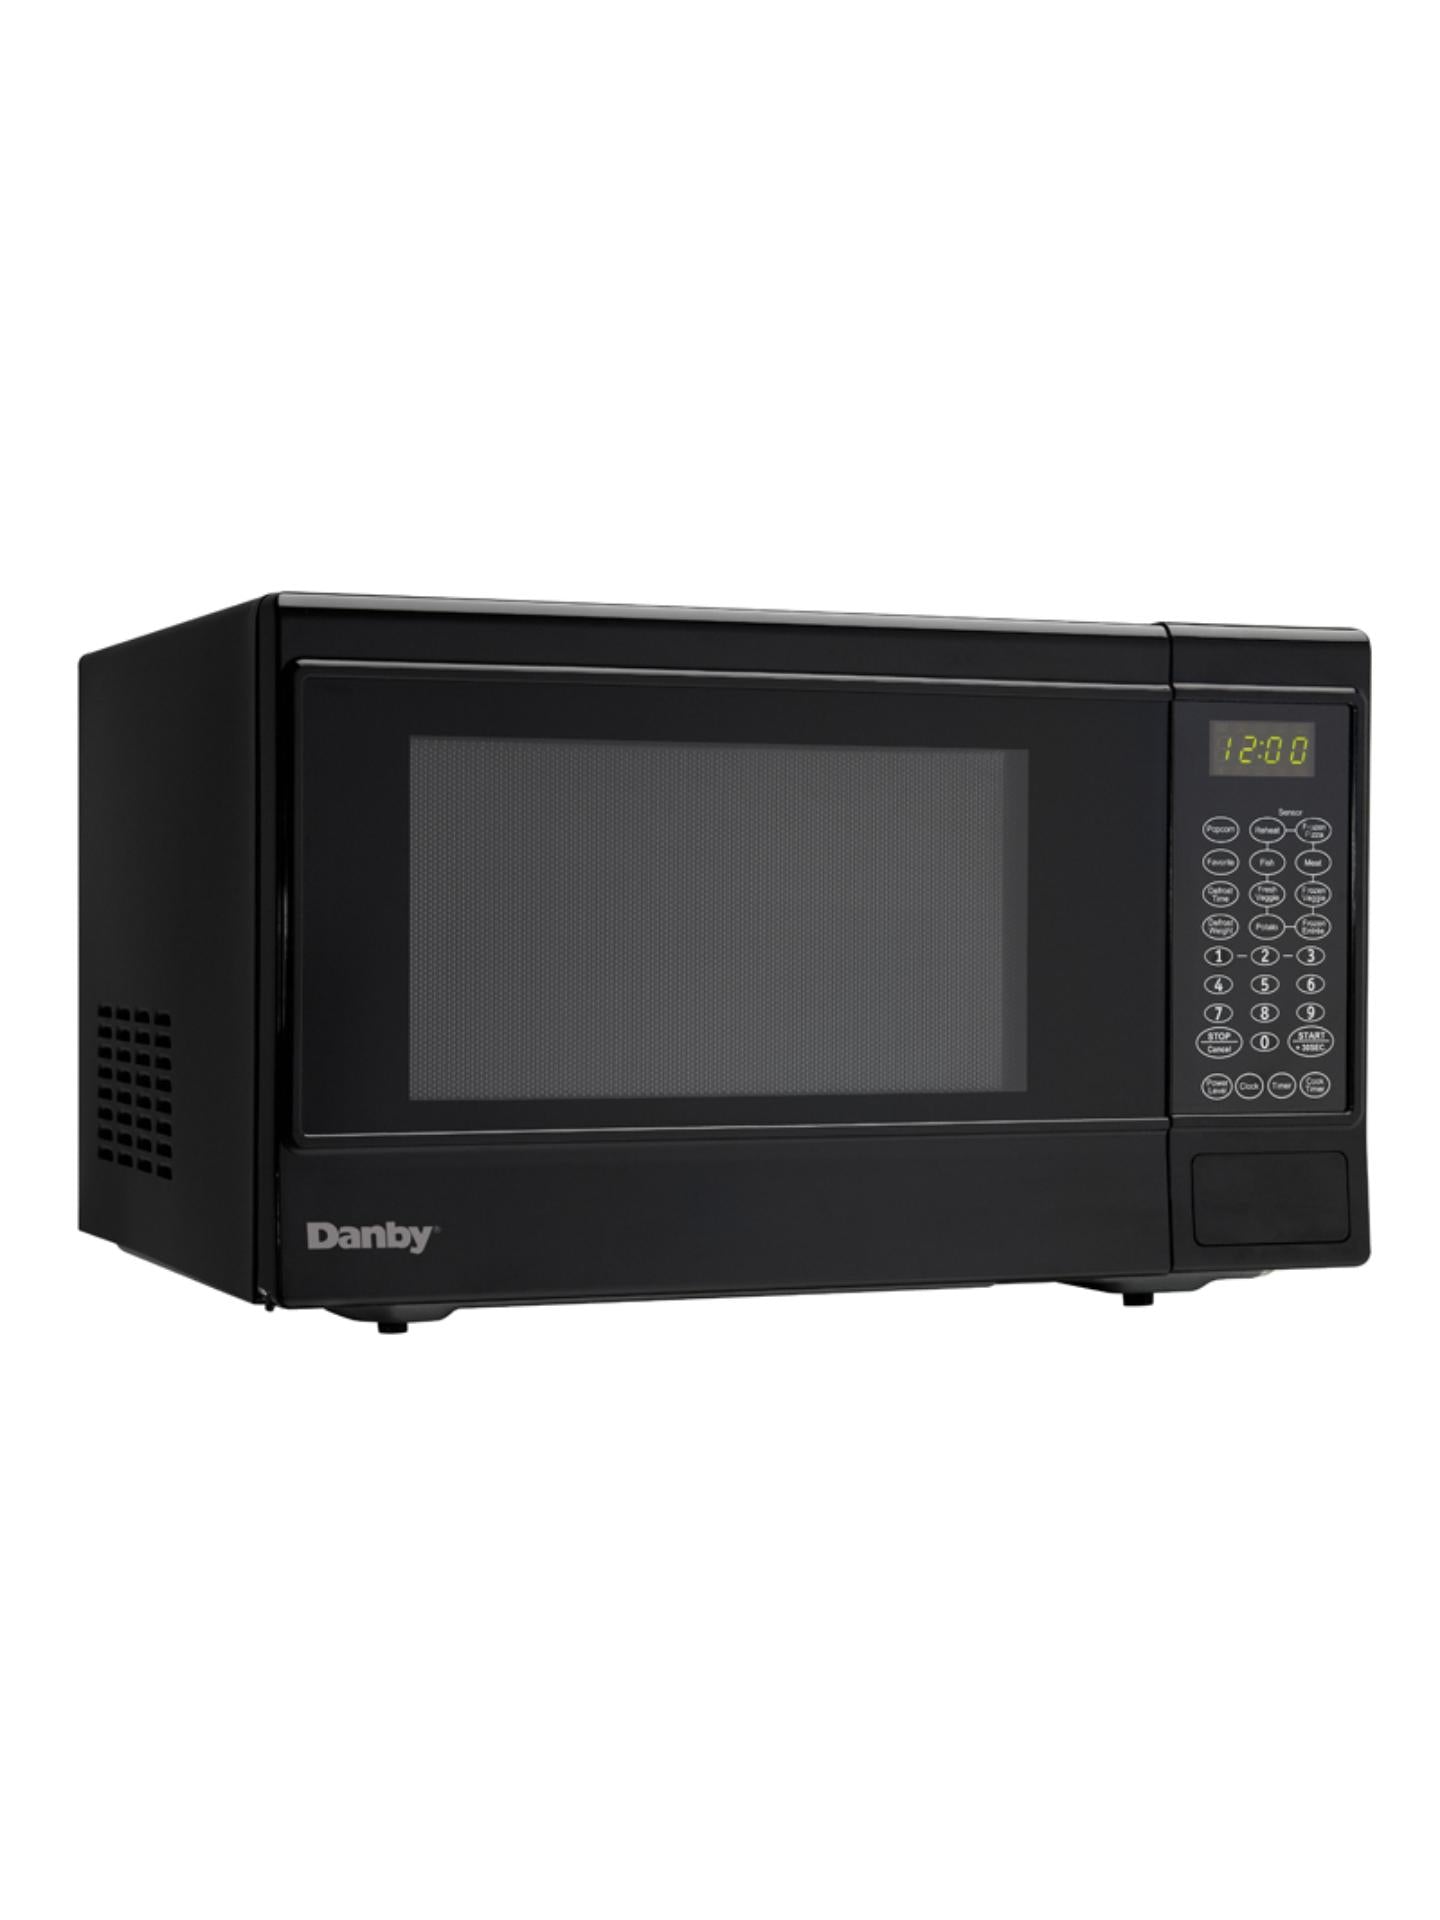 Danby 1.4 cu ft. Countertop Microwave in Black